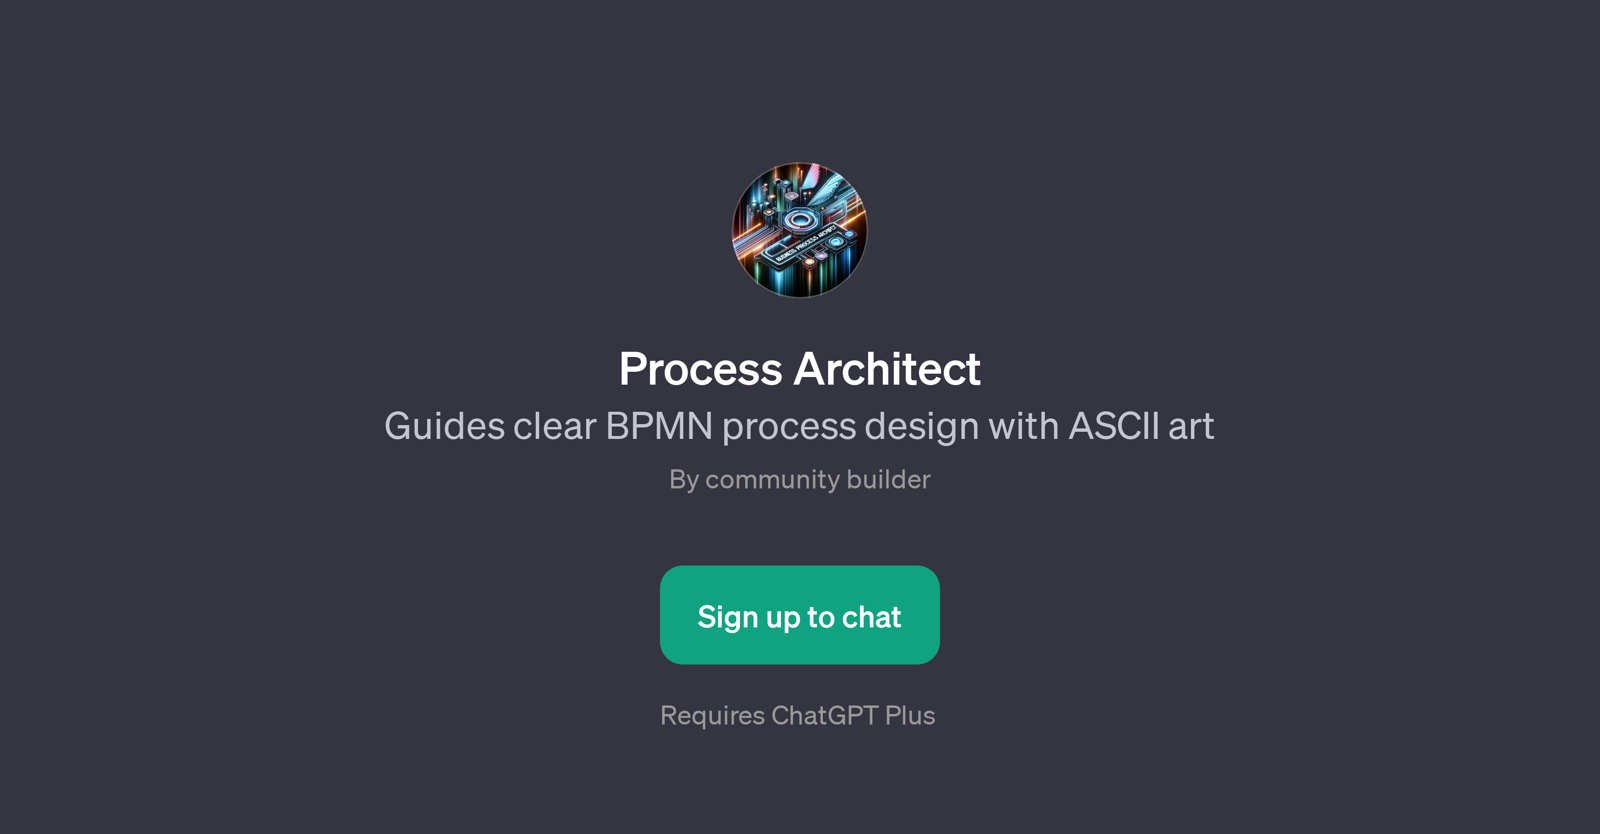 Process Architect website